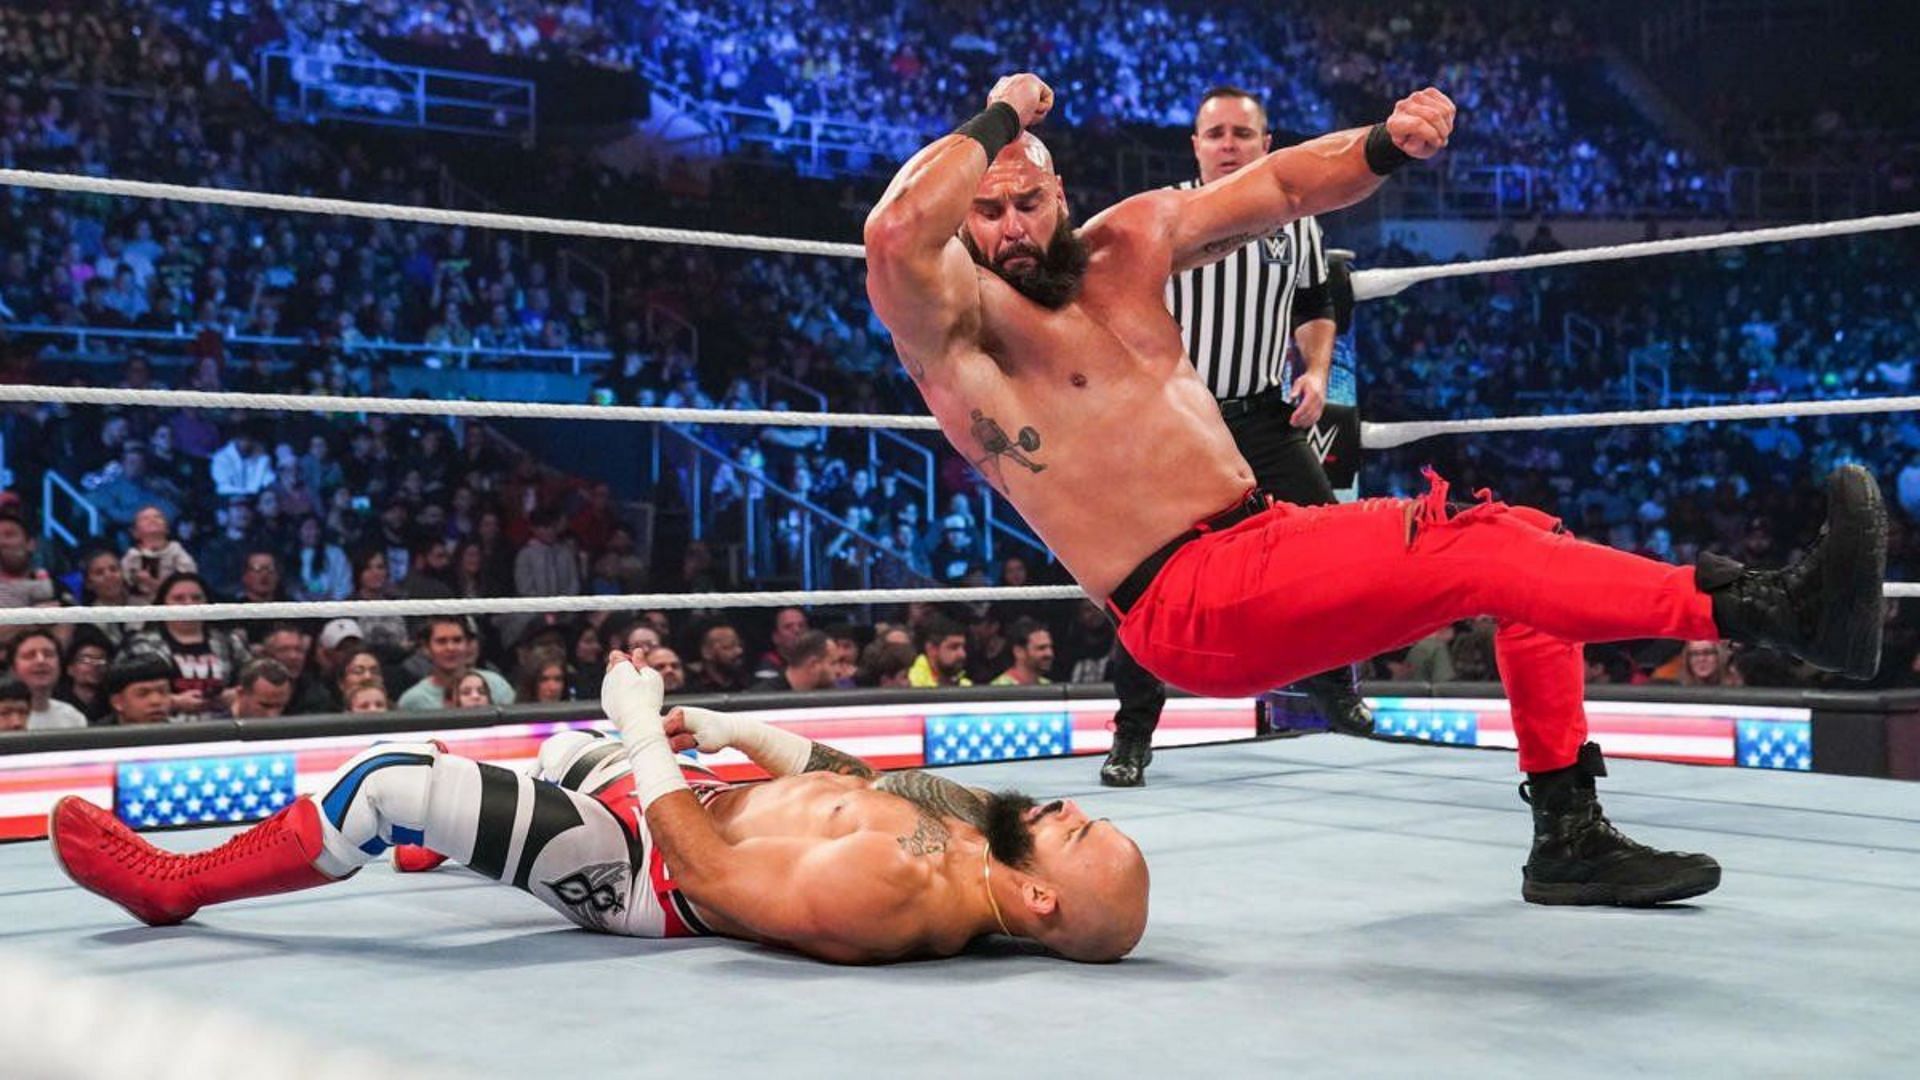 Ricochet defeated Braun Strowman last Friday on WWE SmackDown